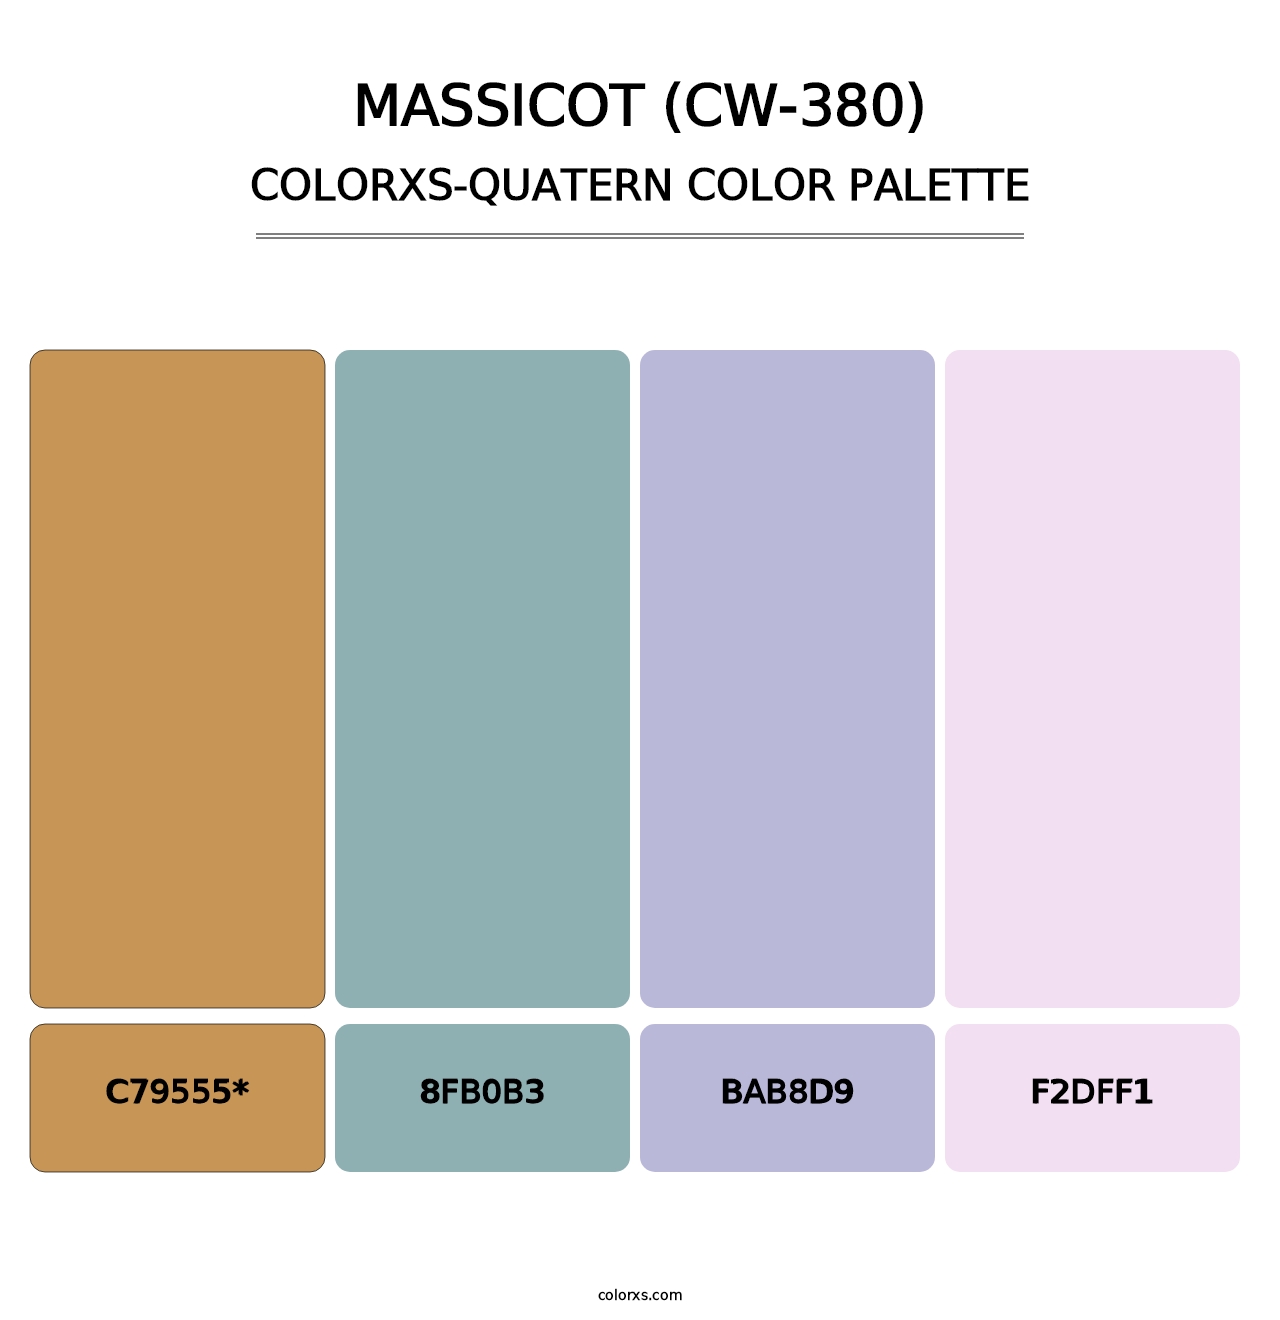 Massicot (CW-380) - Colorxs Quatern Palette